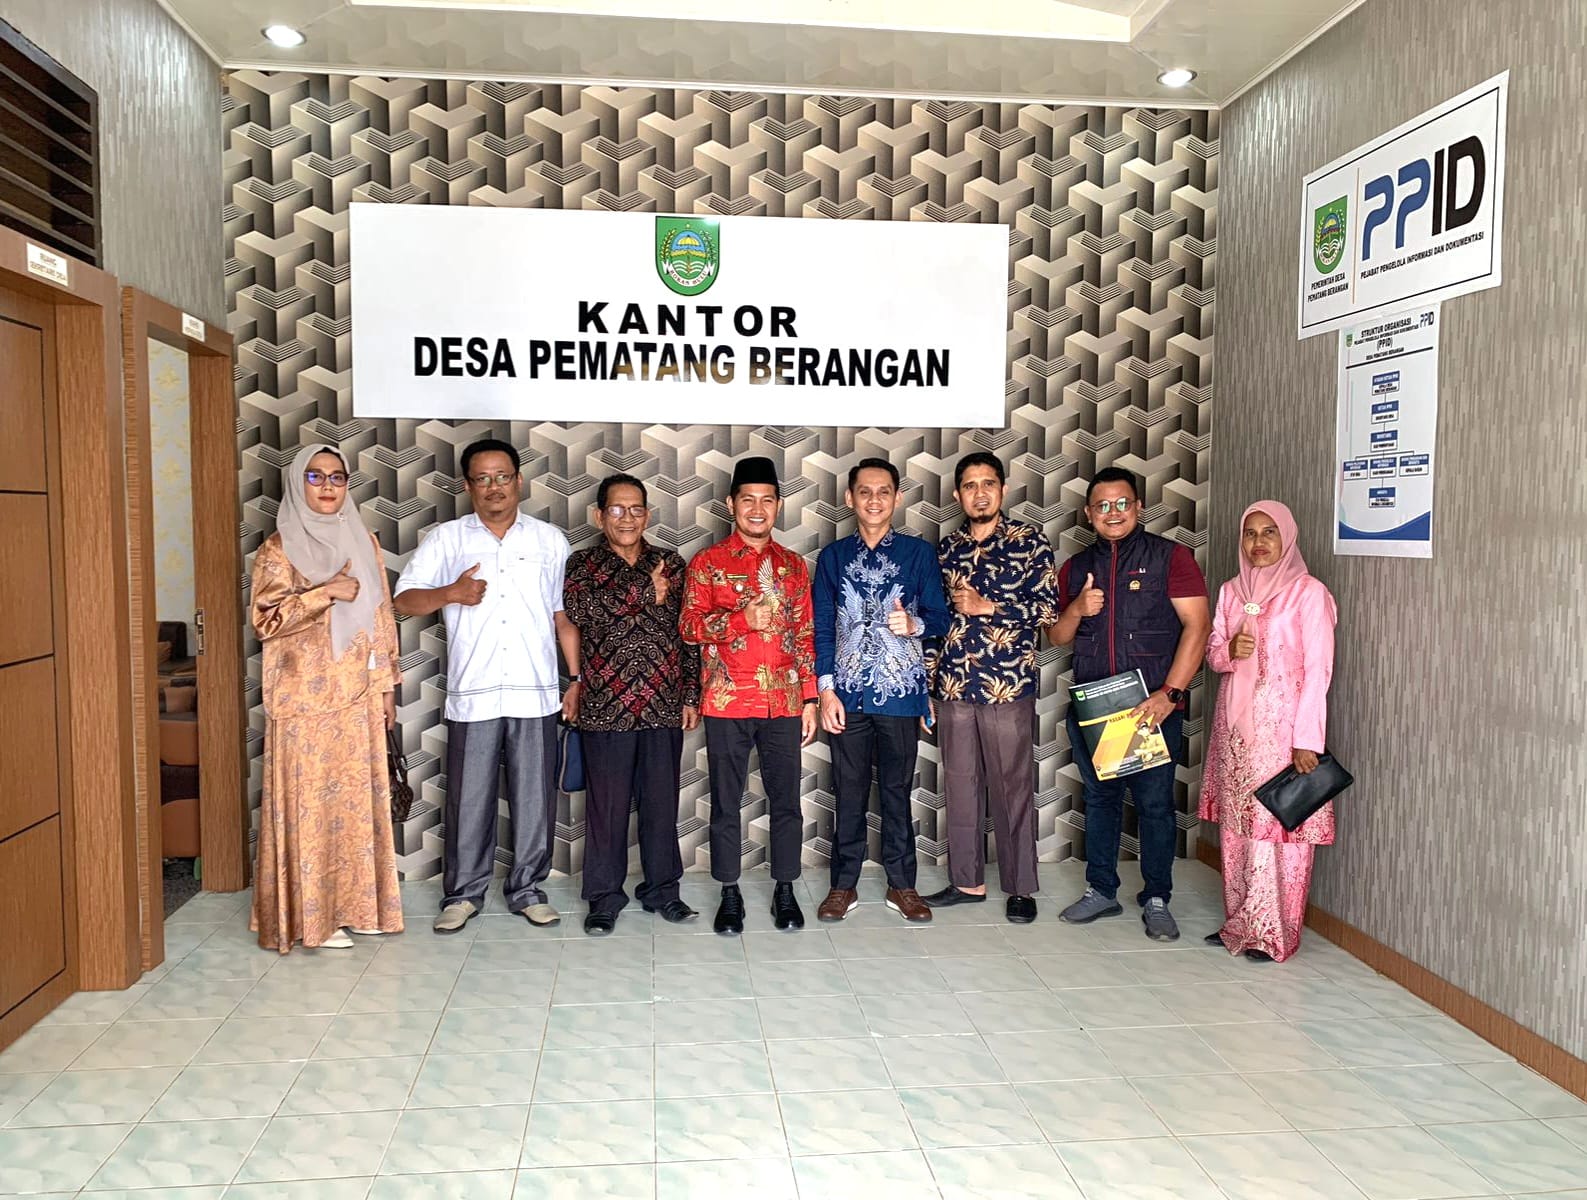 Pemdes Pematang Berangan mendapat Kunjungan dari Wali Nagari III Koto Aur Malintang Padang Pariaman , Sumatera Barat